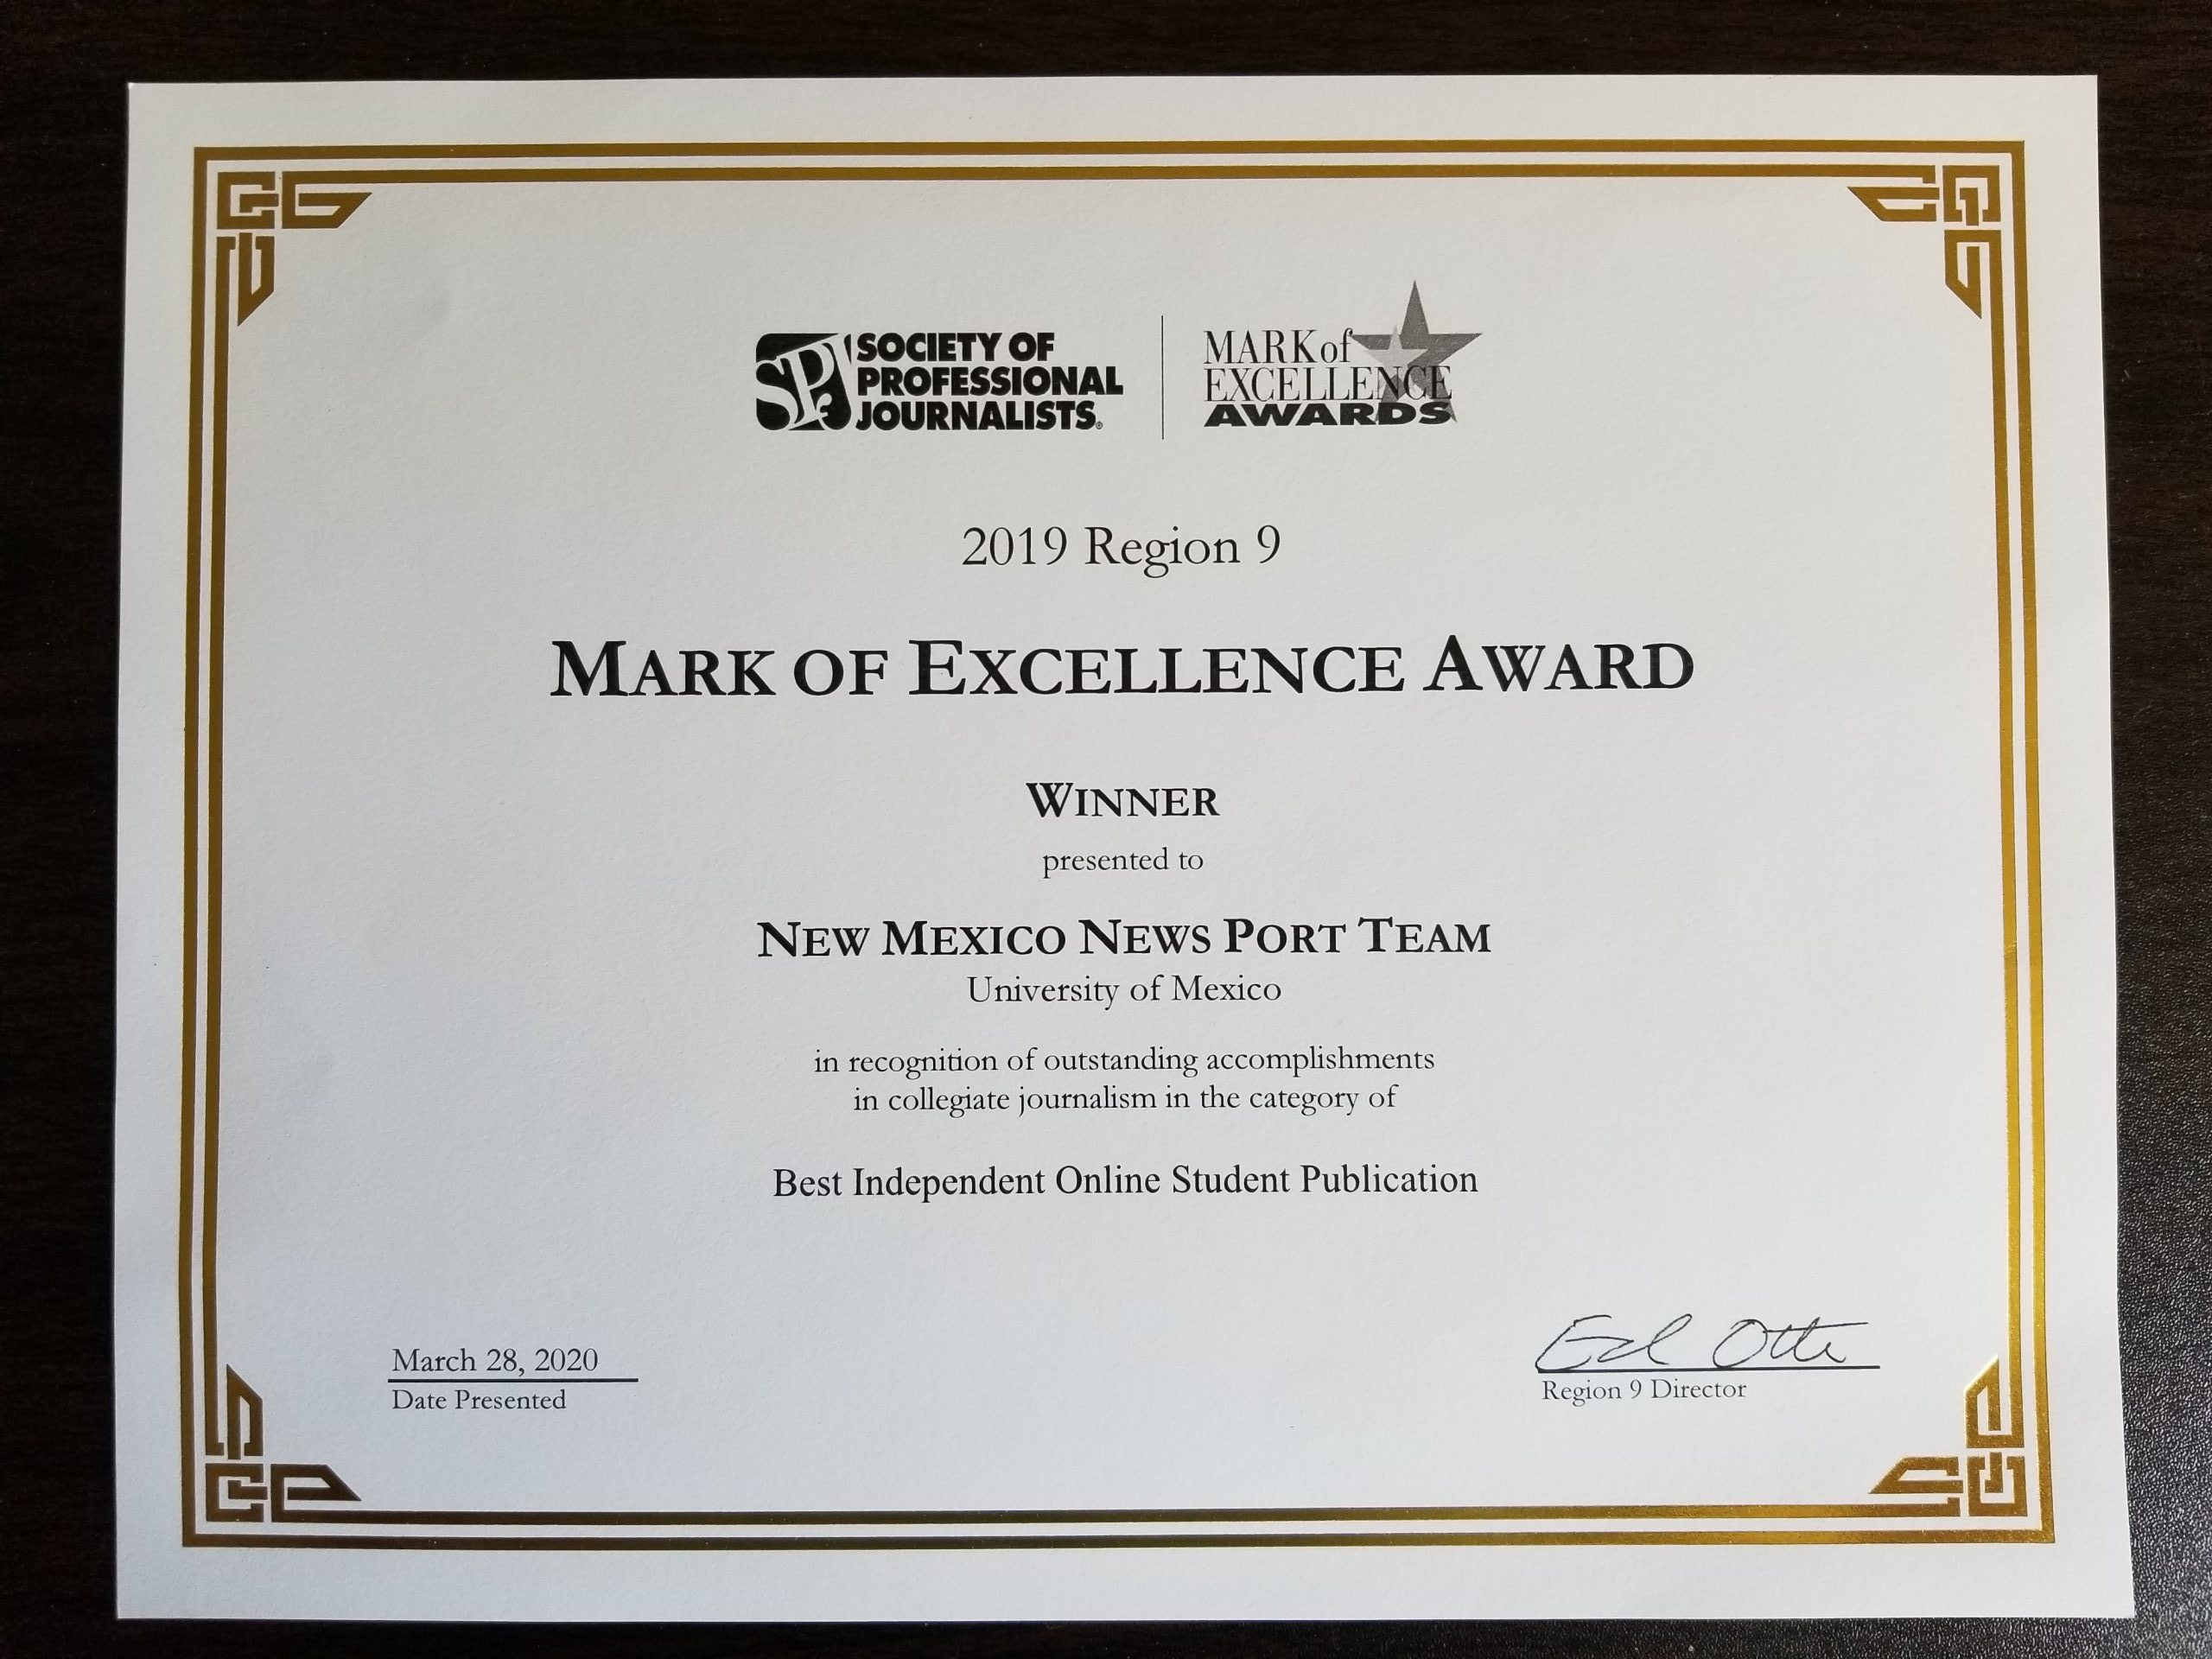 photo of award certificate